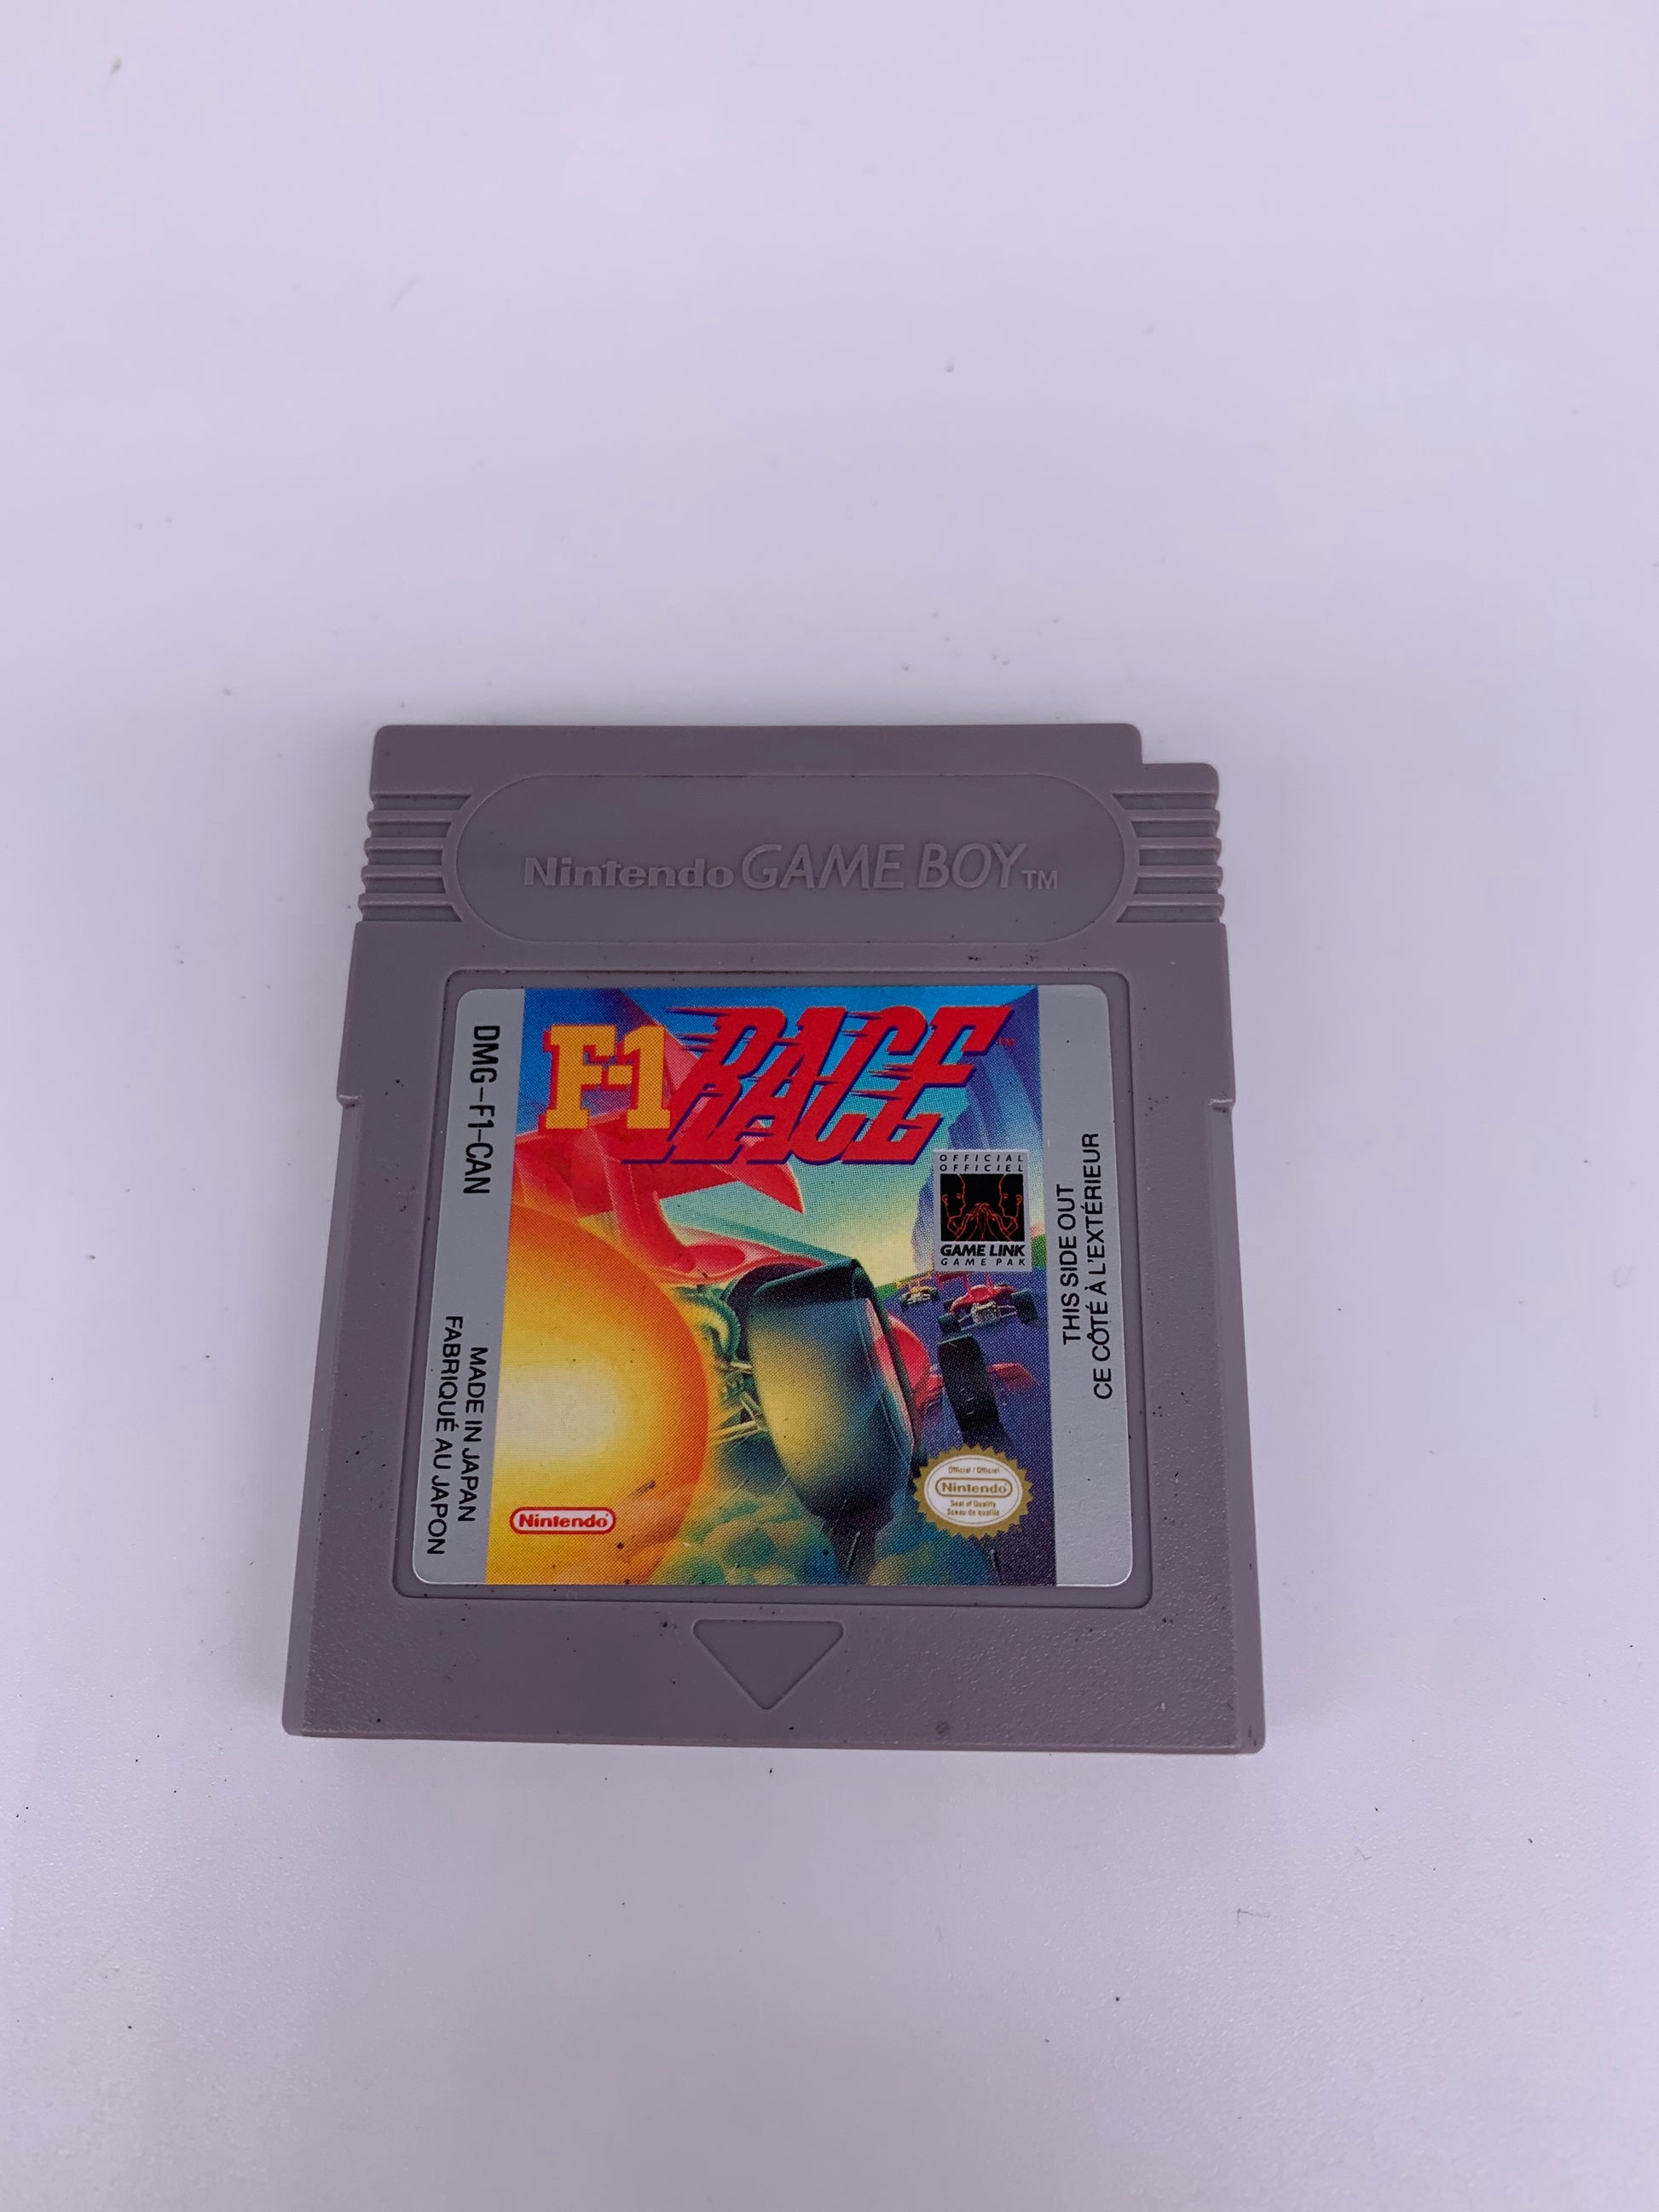 PiXEL-RETRO.COM : GAME BOY GAMEBOY (GB) GAME NTSC F1 RACE